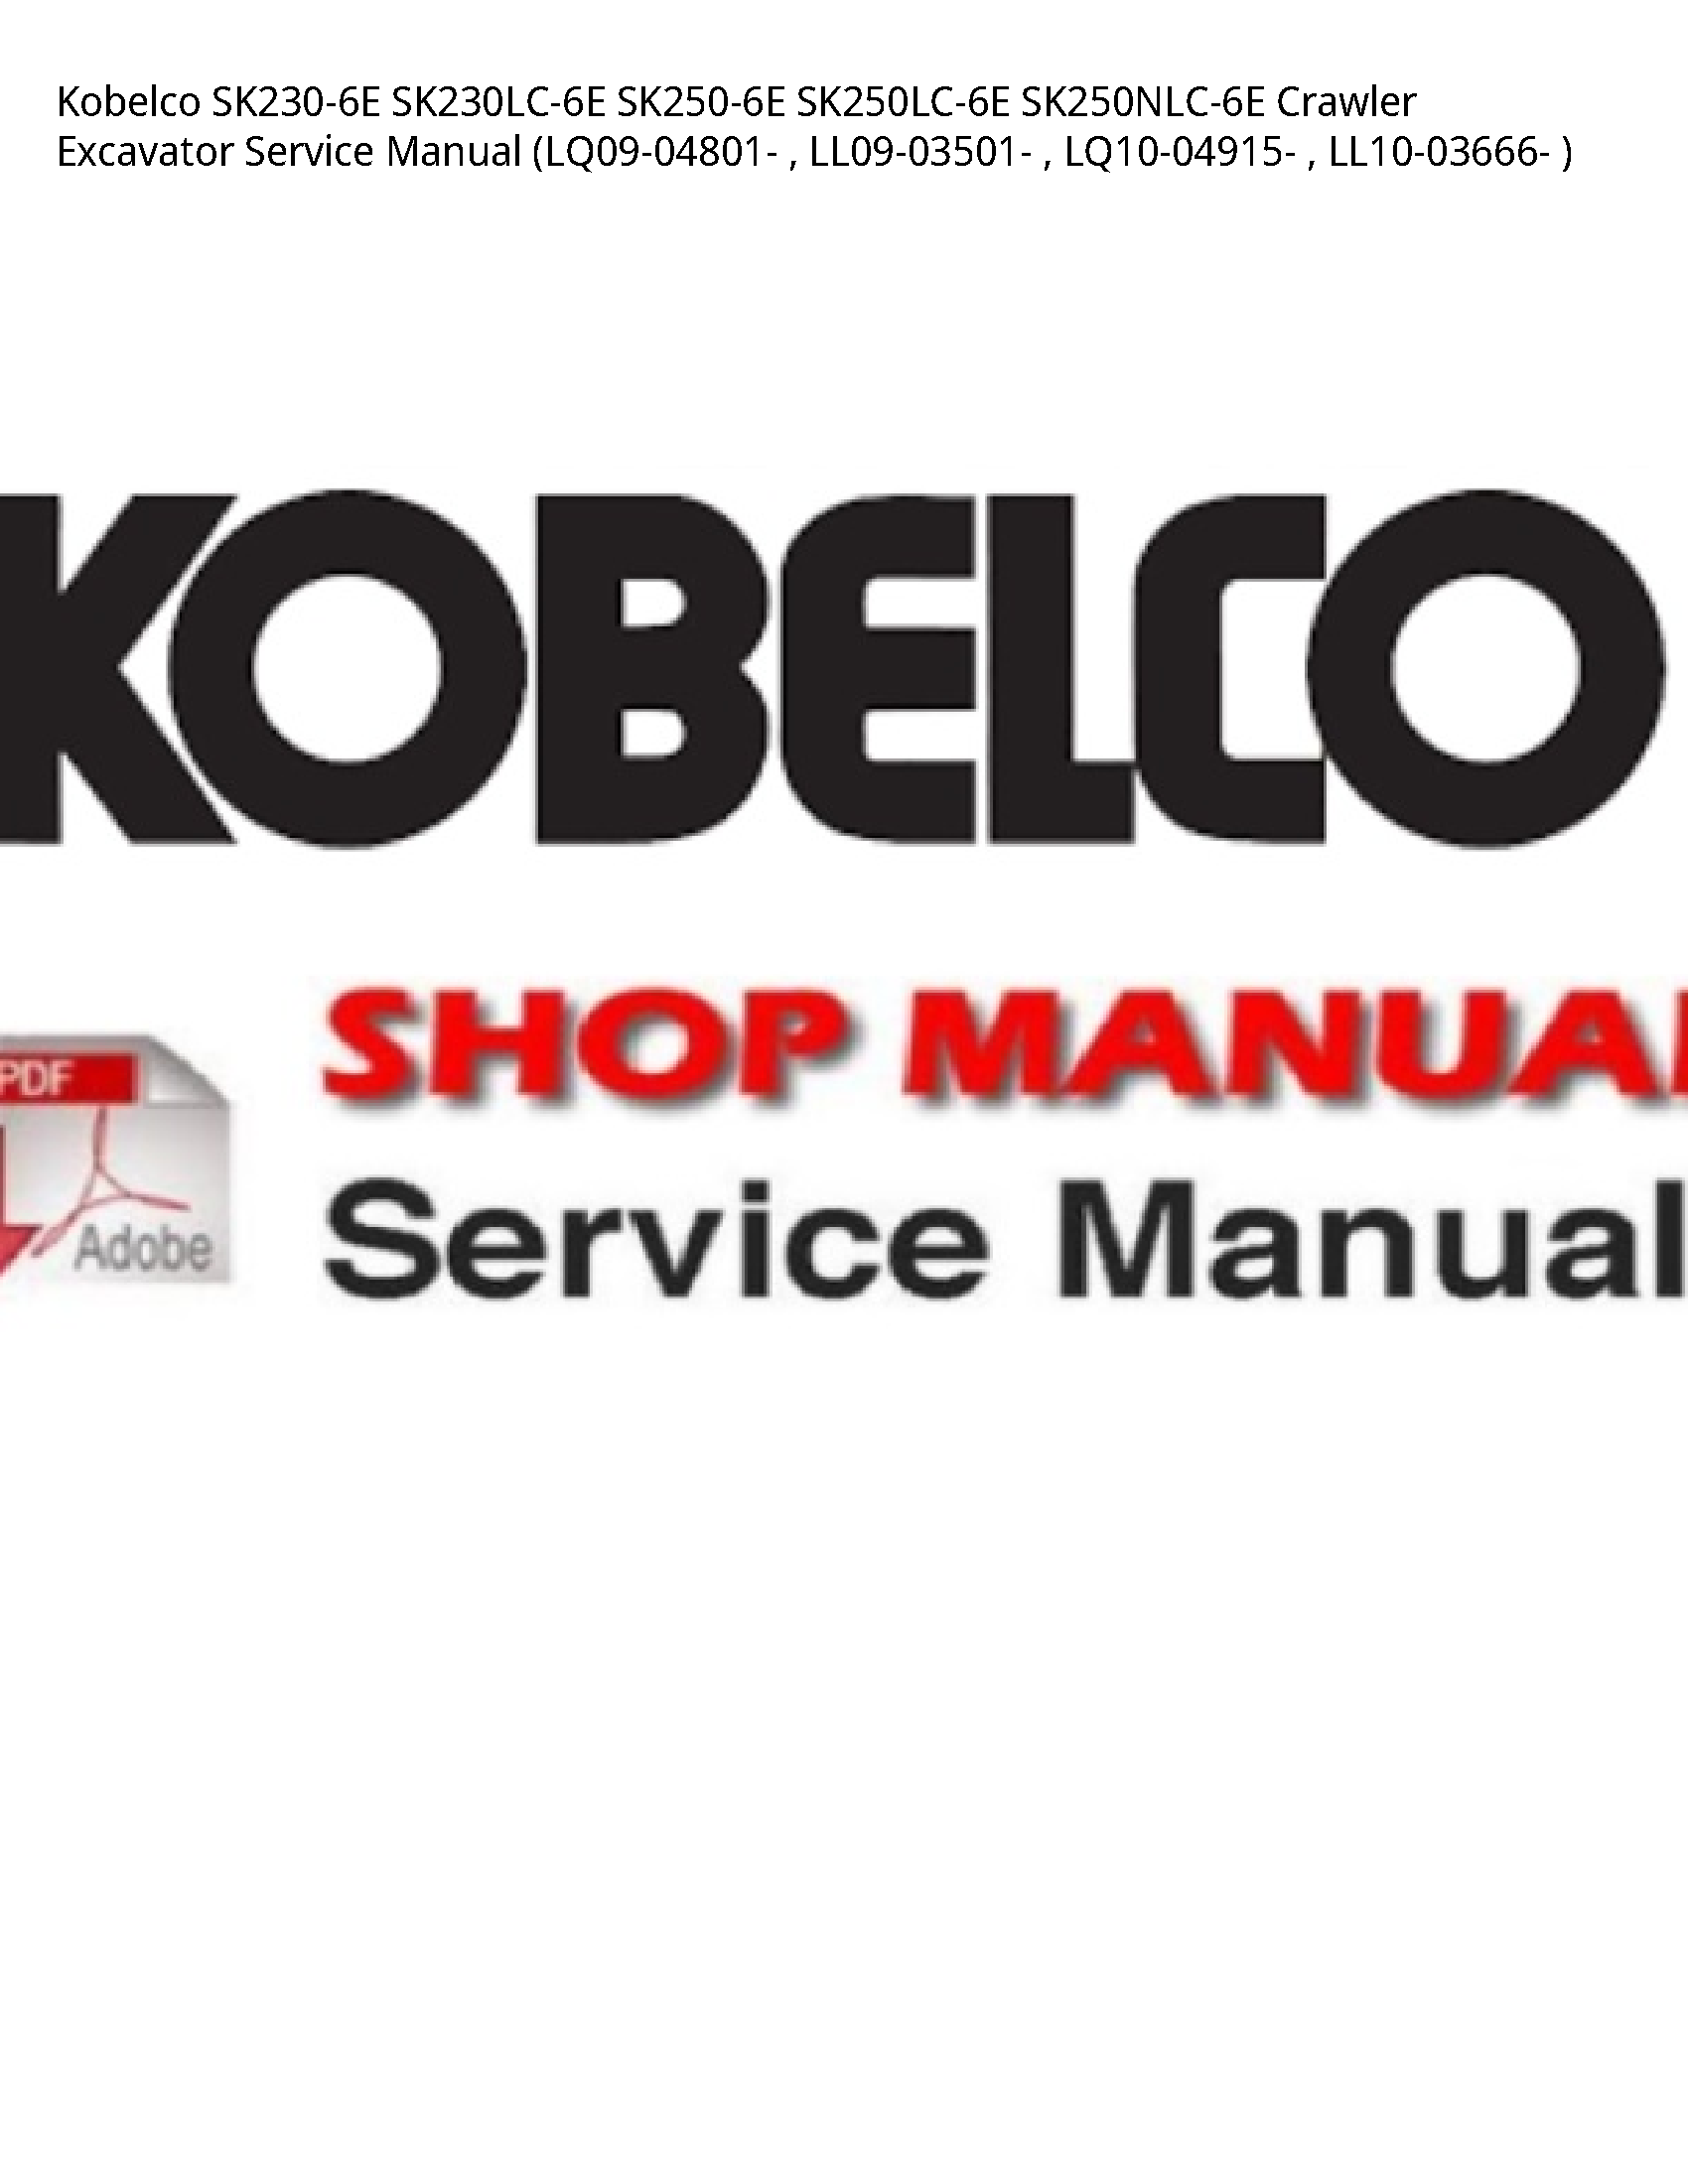 Kobelco SK230-6E Crawler Excavator Service manual